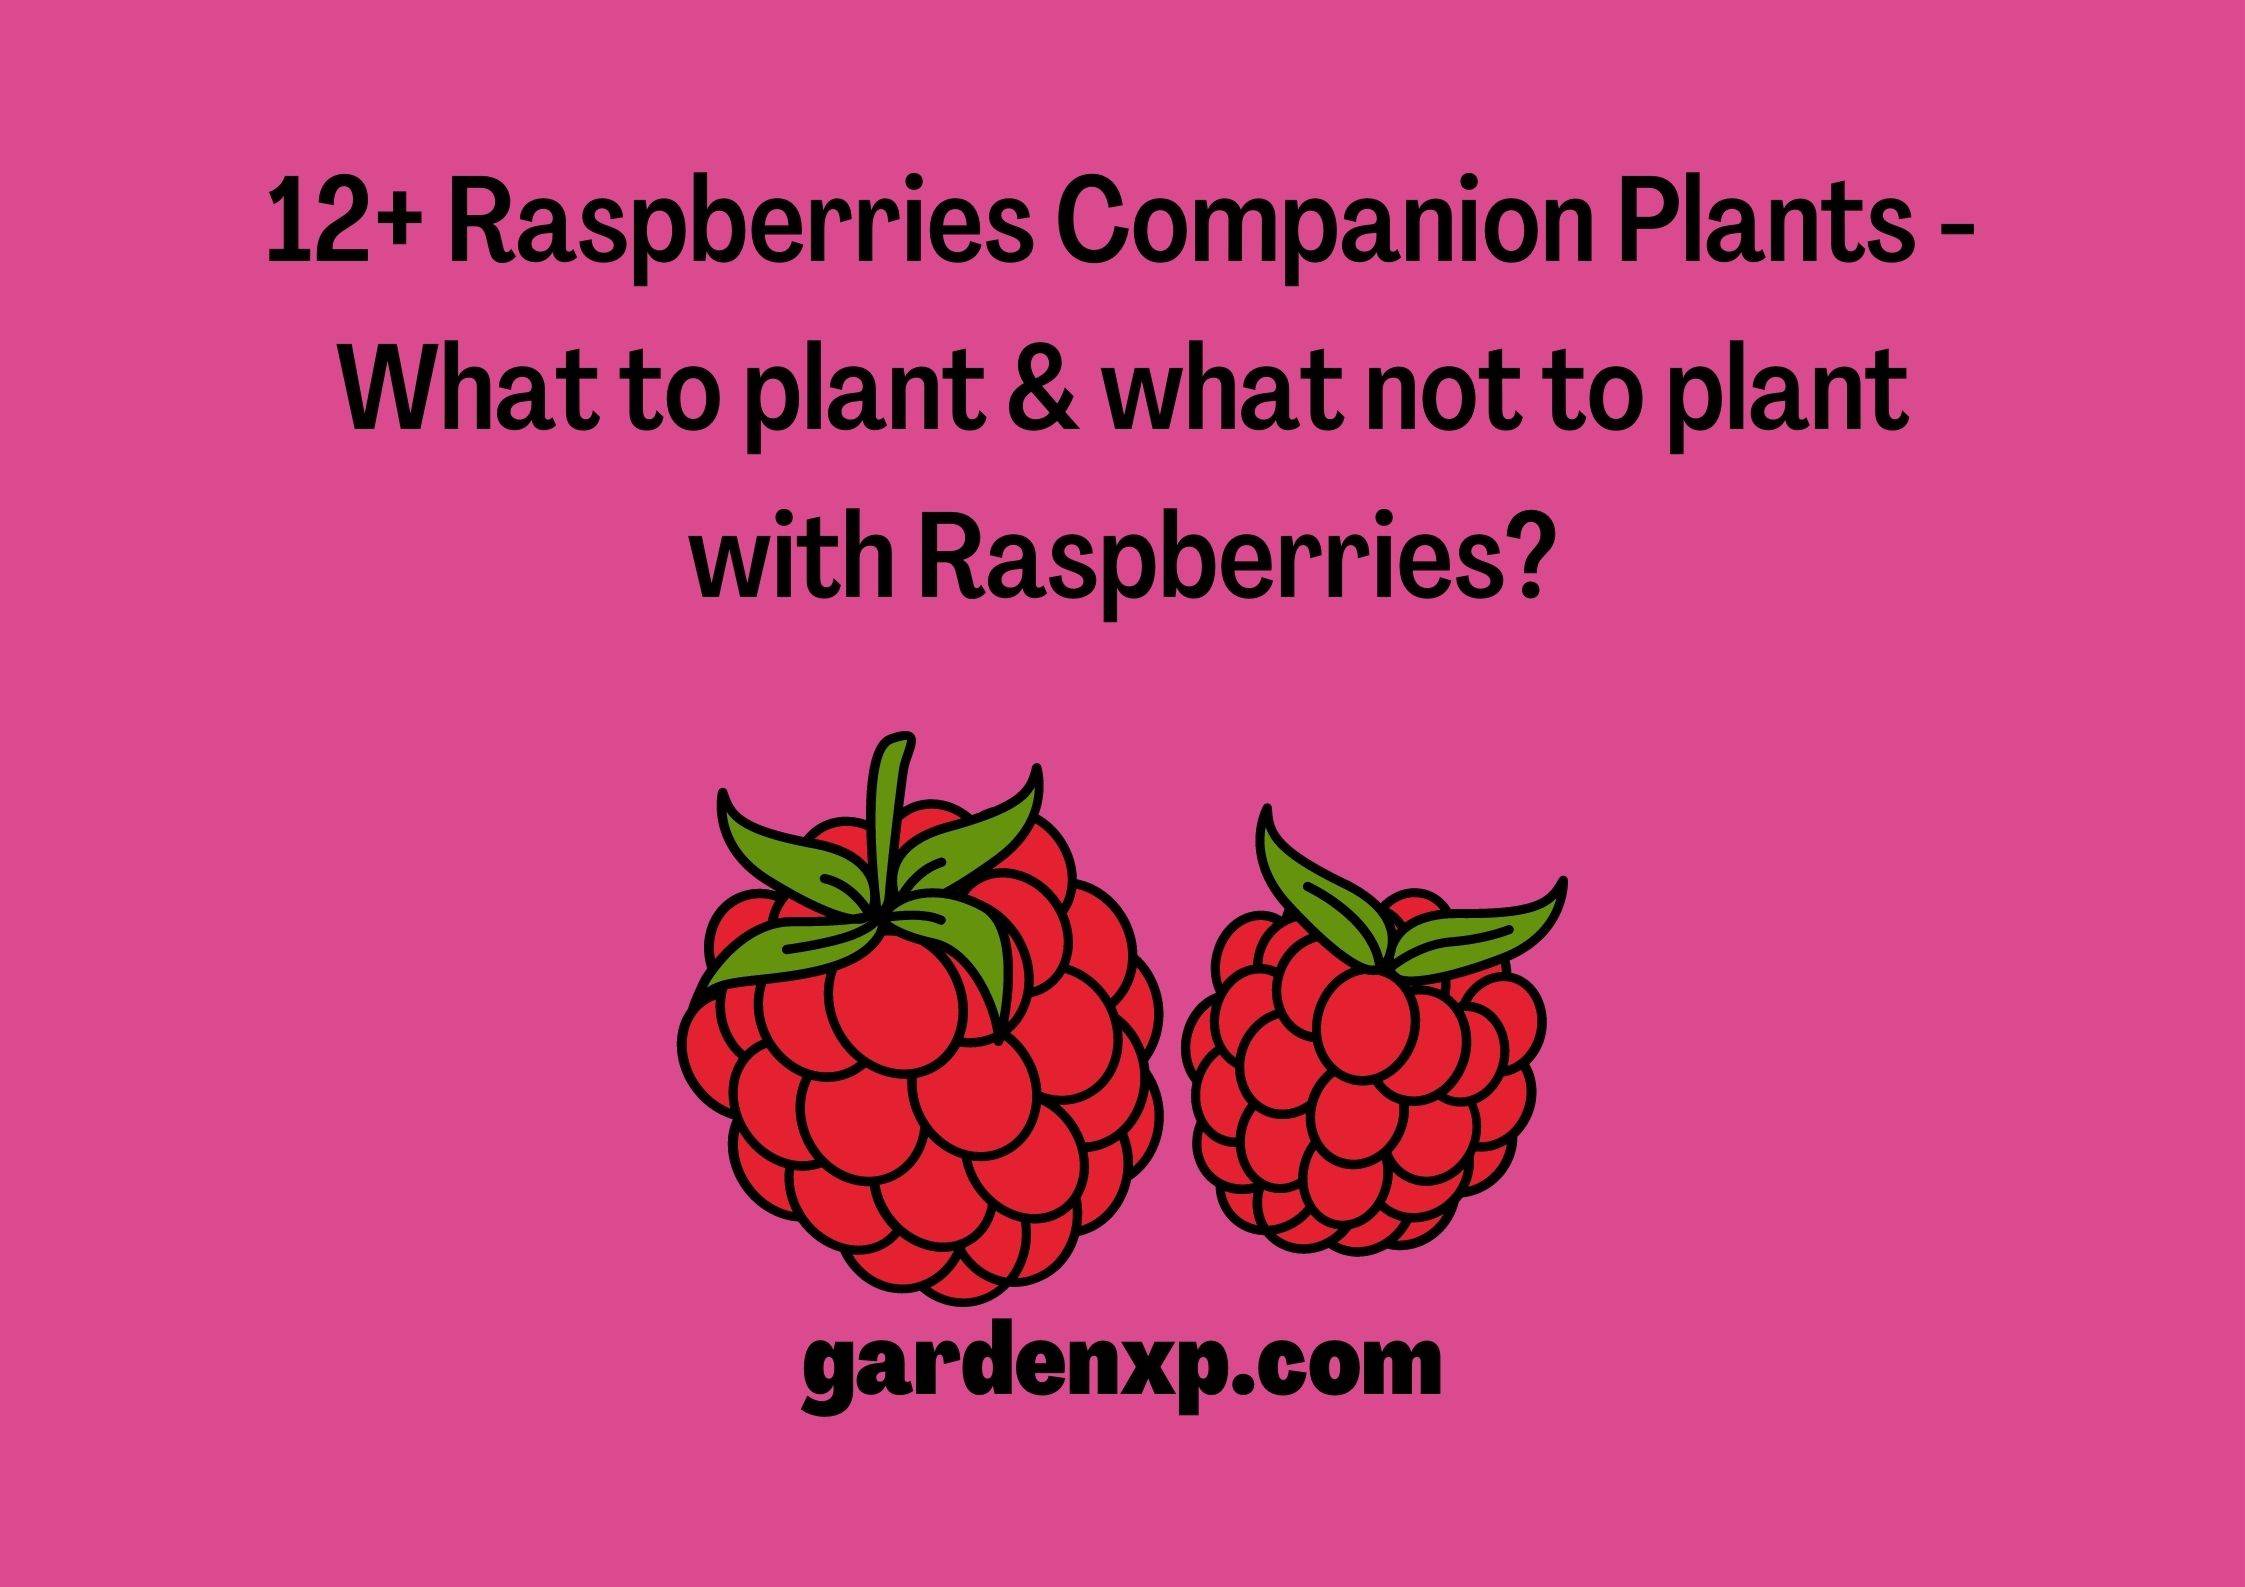 12+ Raspberries Companion Plants - What to plant & what not to plant with Raspberries?